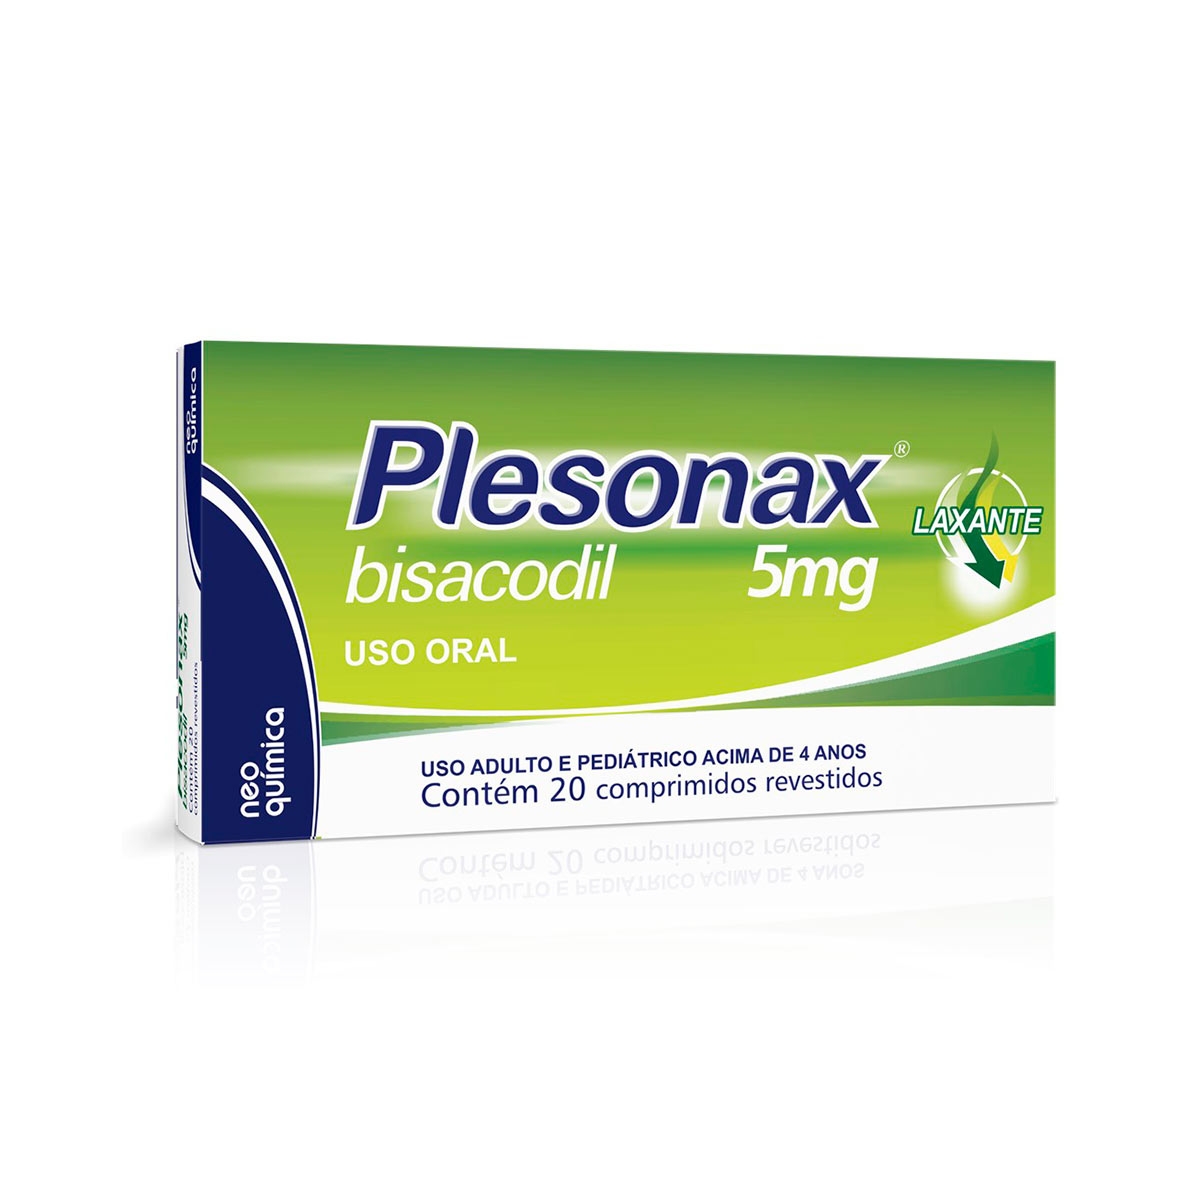 Plesonax 5mg 20 comprimidos